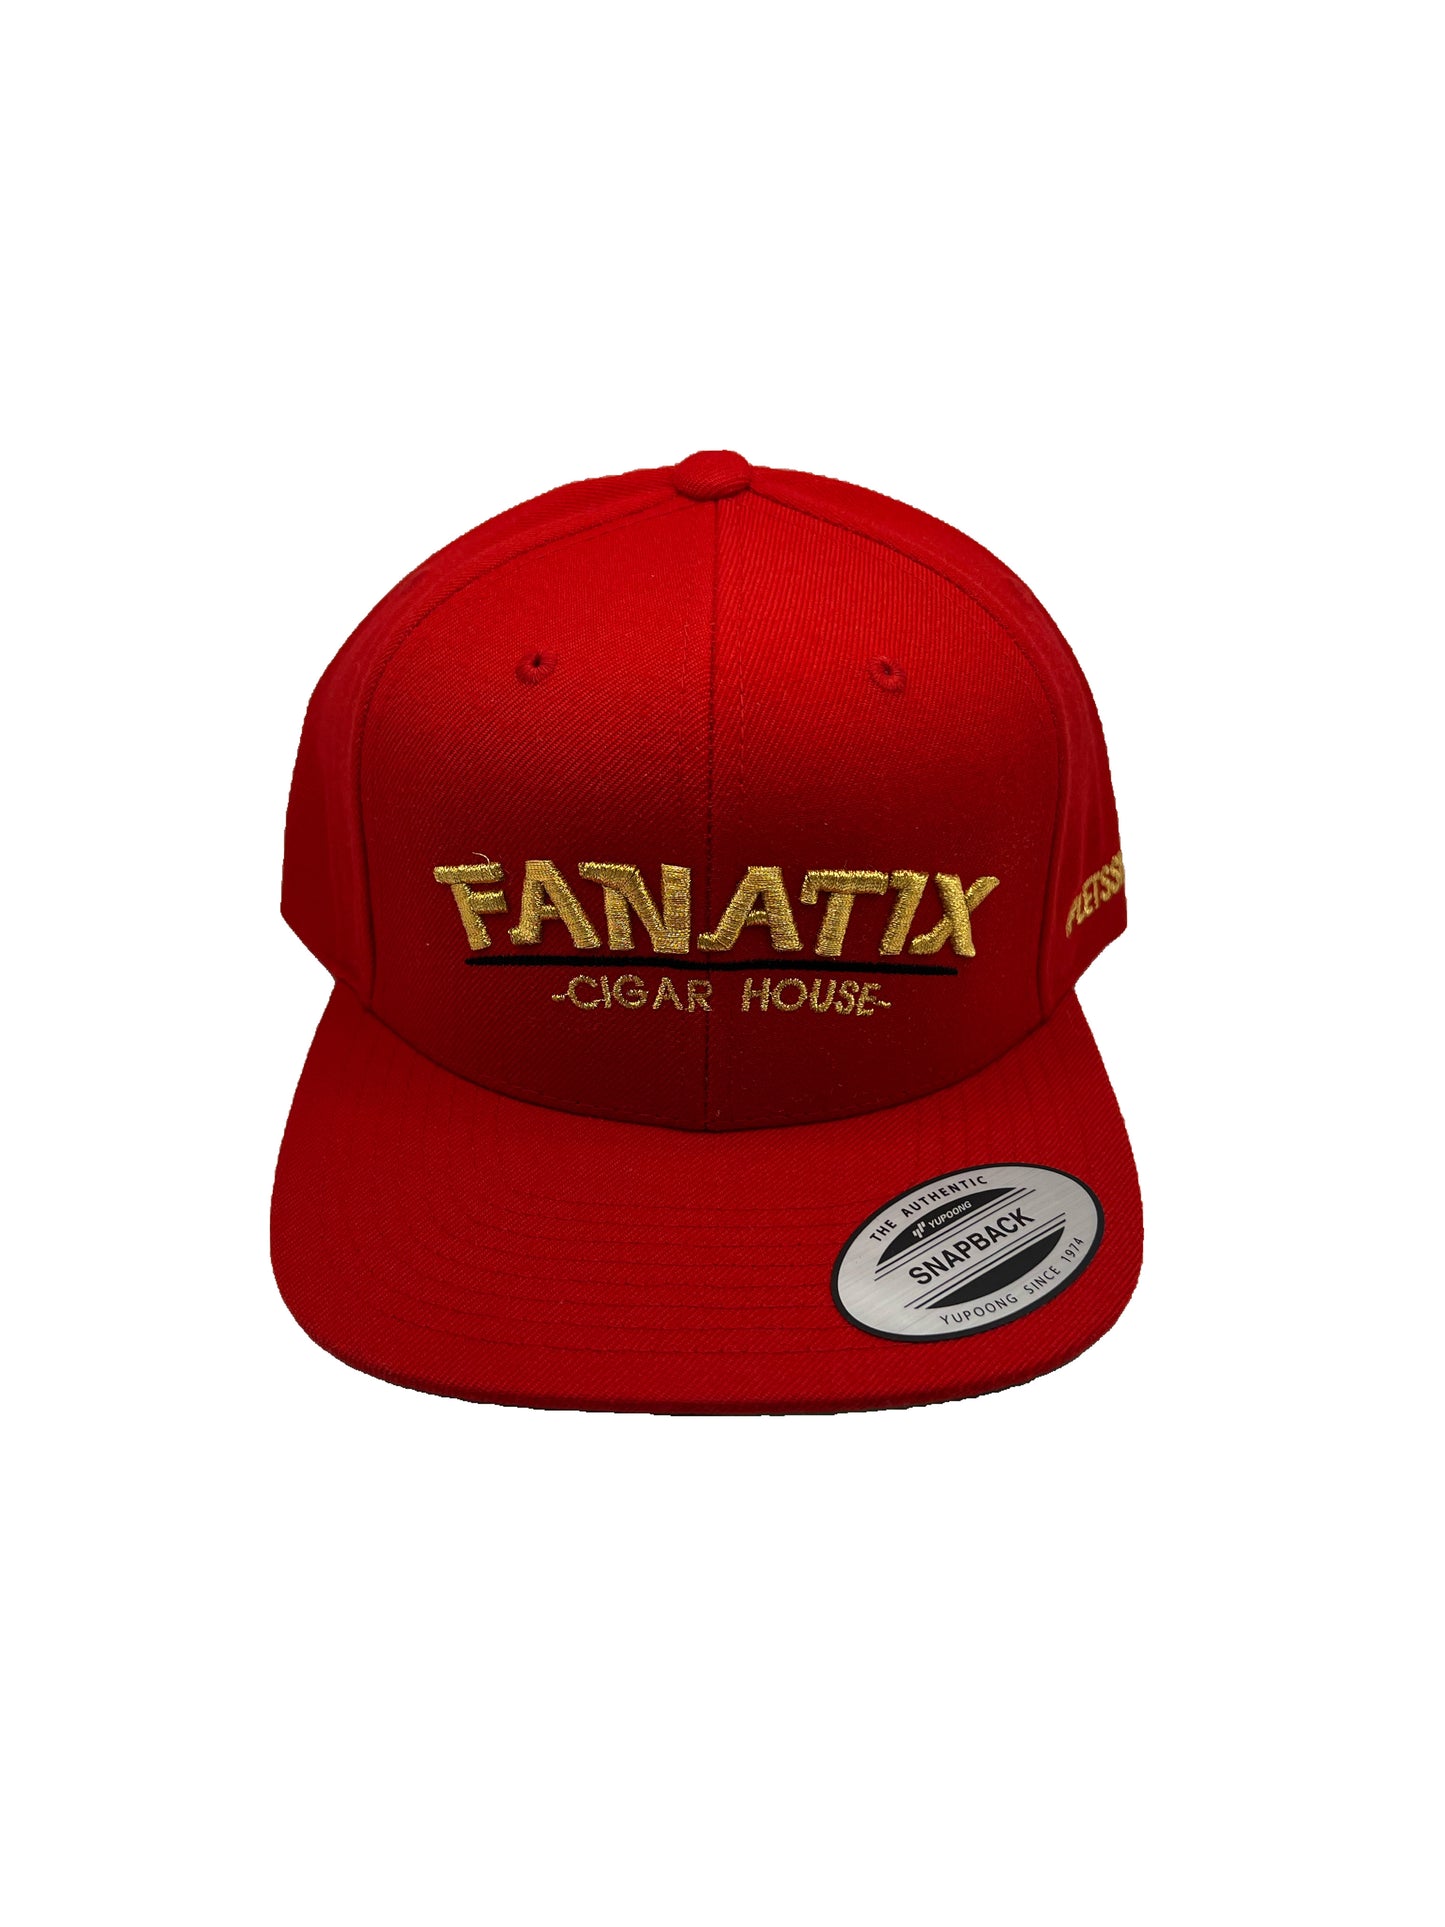 Fanatix Cigar House Hat- Red